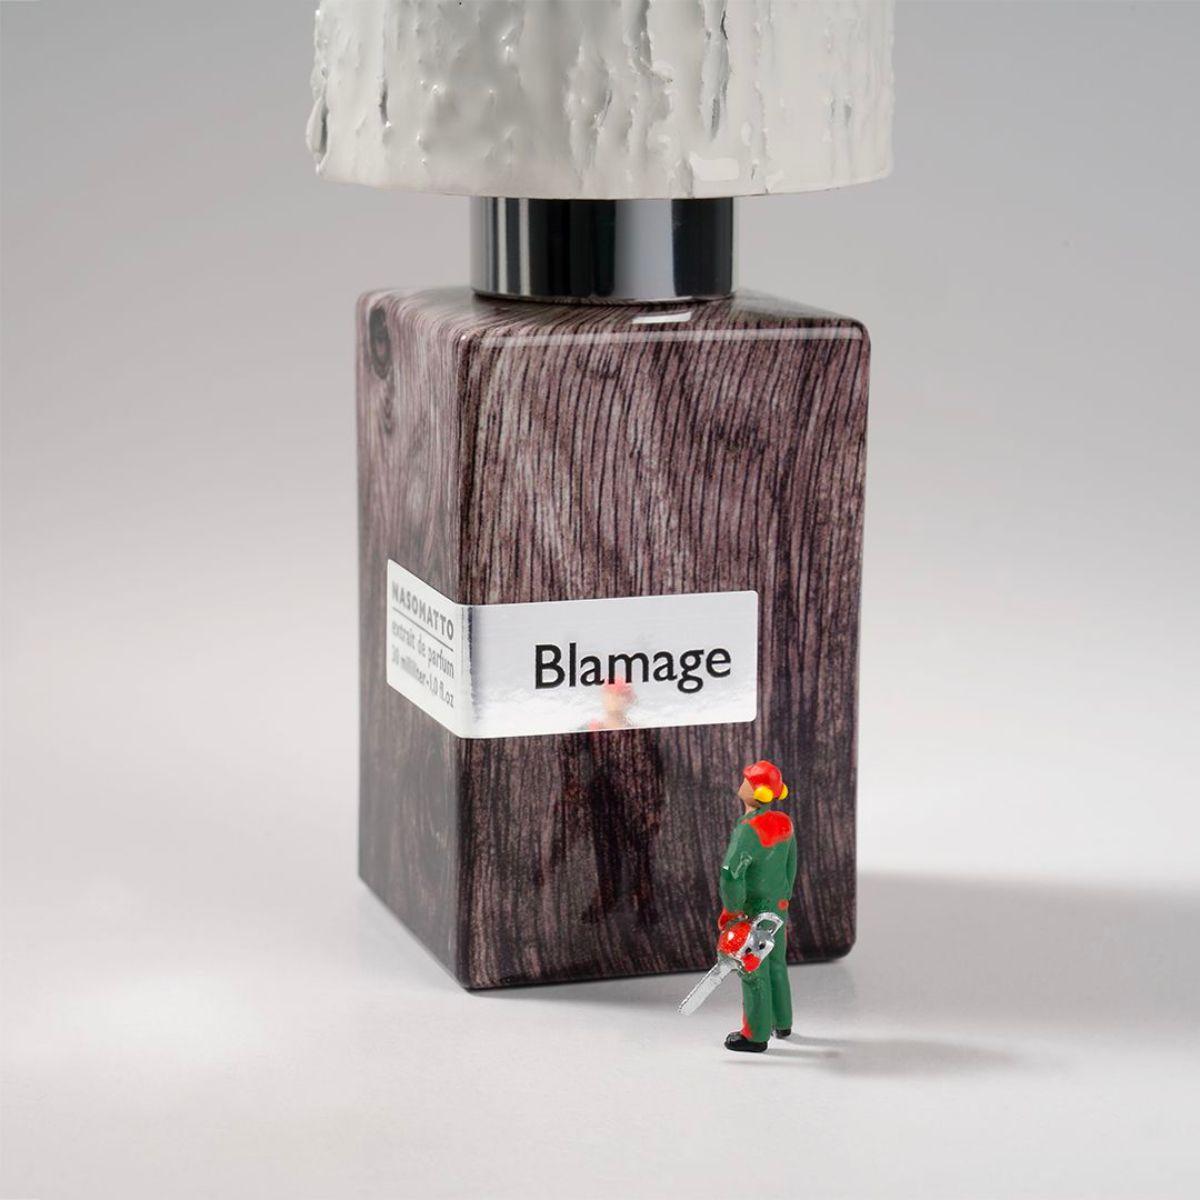 Image of Blamage extrait de parfum 30 ml by the perfume brand Nasomatto